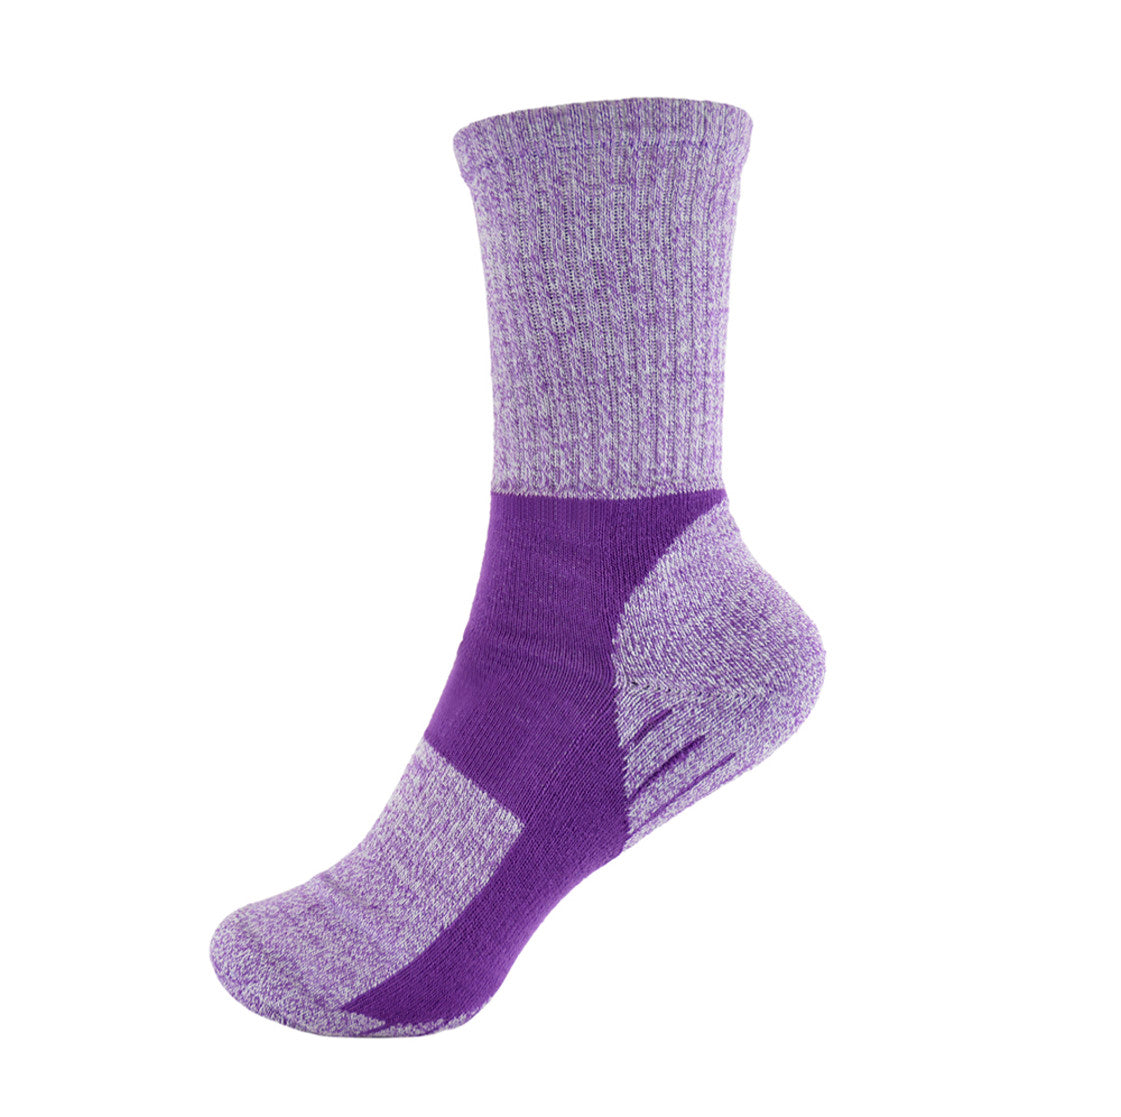 2 Pairs Ladies Trekking Socks UK Size 4-7 (EU: 37-41) With Cushioned heel & sole